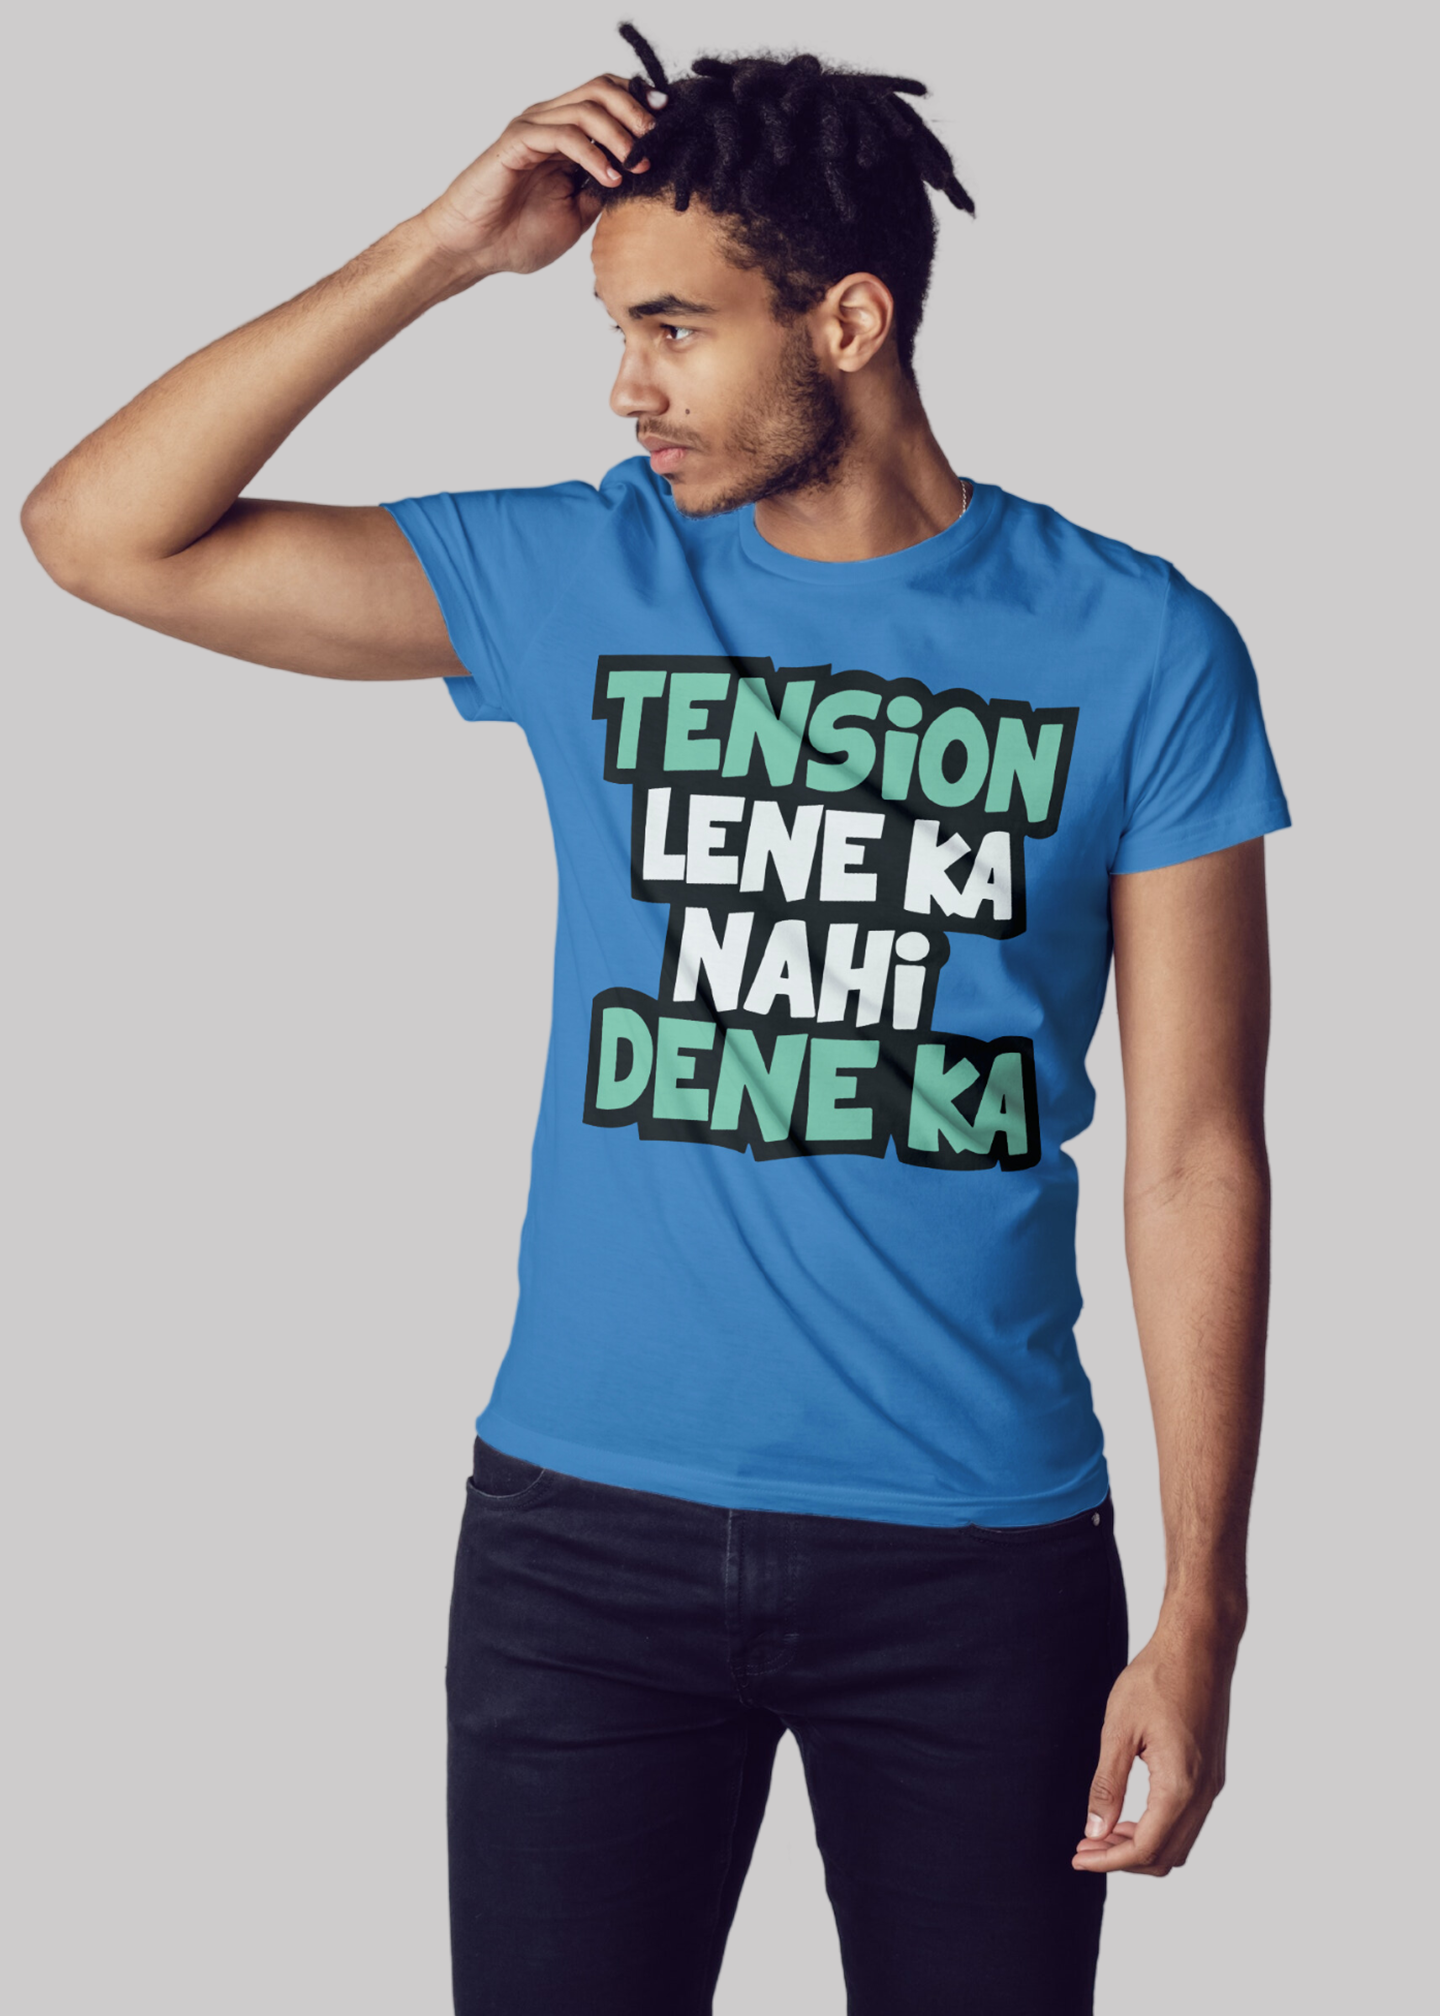 Tension lene ka nahi Printed Half Sleeve Premium Cotton T-shirt For Men